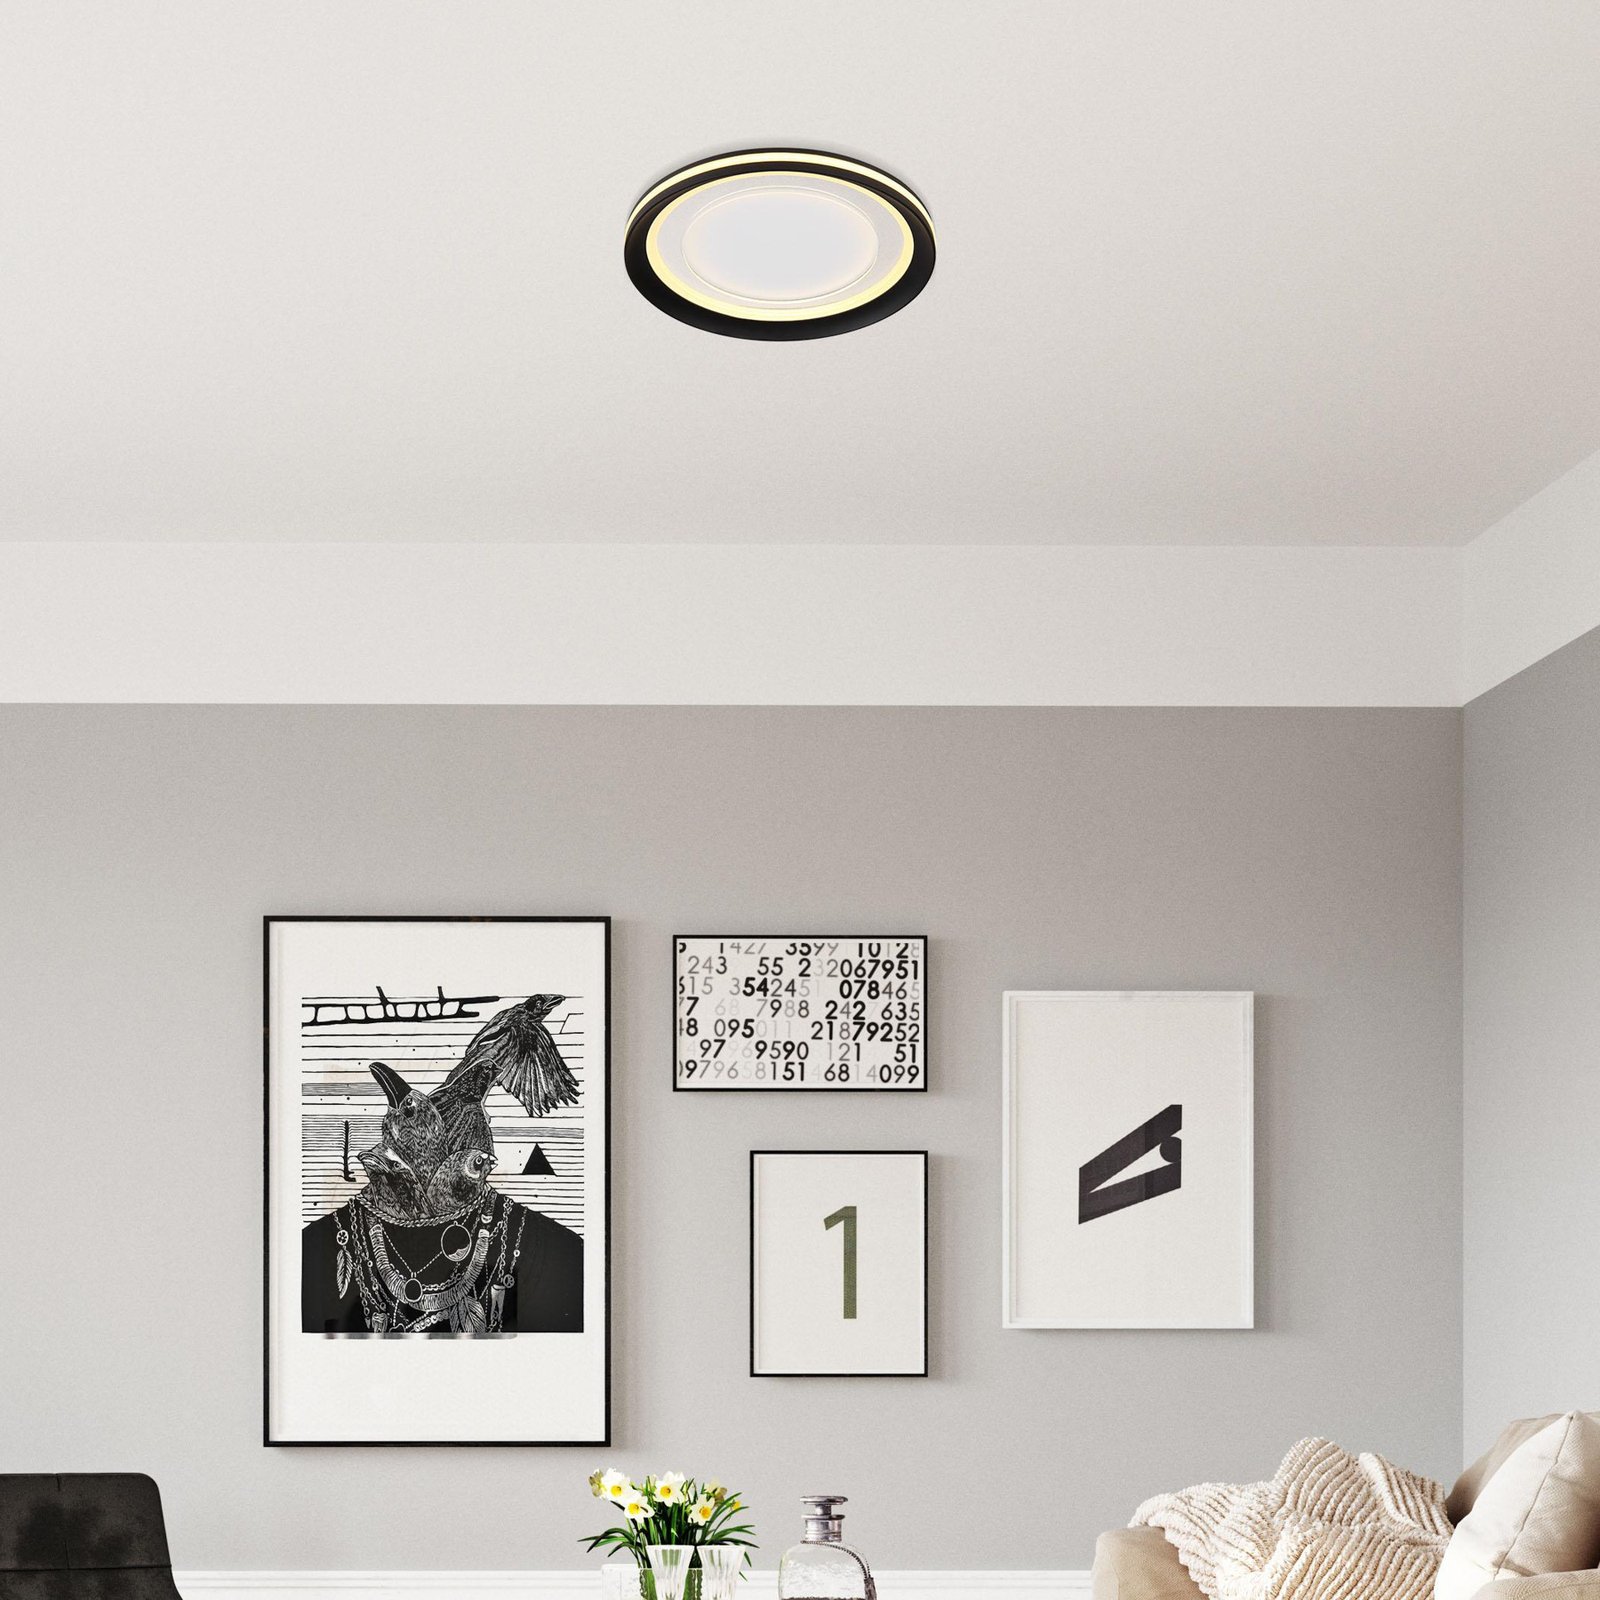 Clarino LED-loftlampe, Ø 36 cm, sort/hvid, akryl